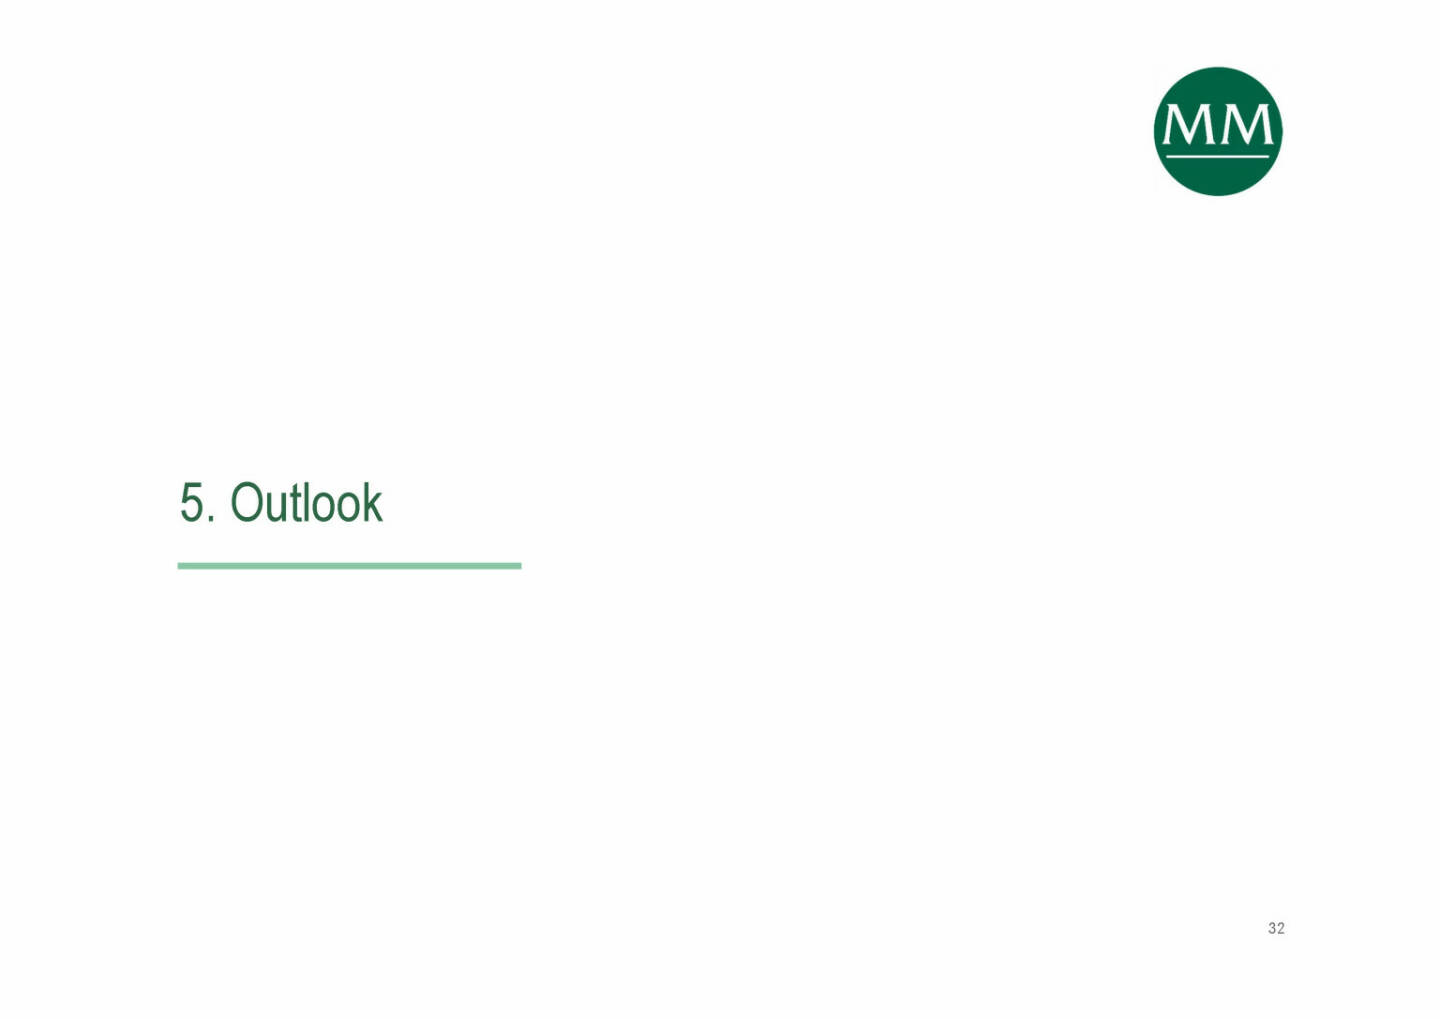 Mayr-Melnhof - Outlook